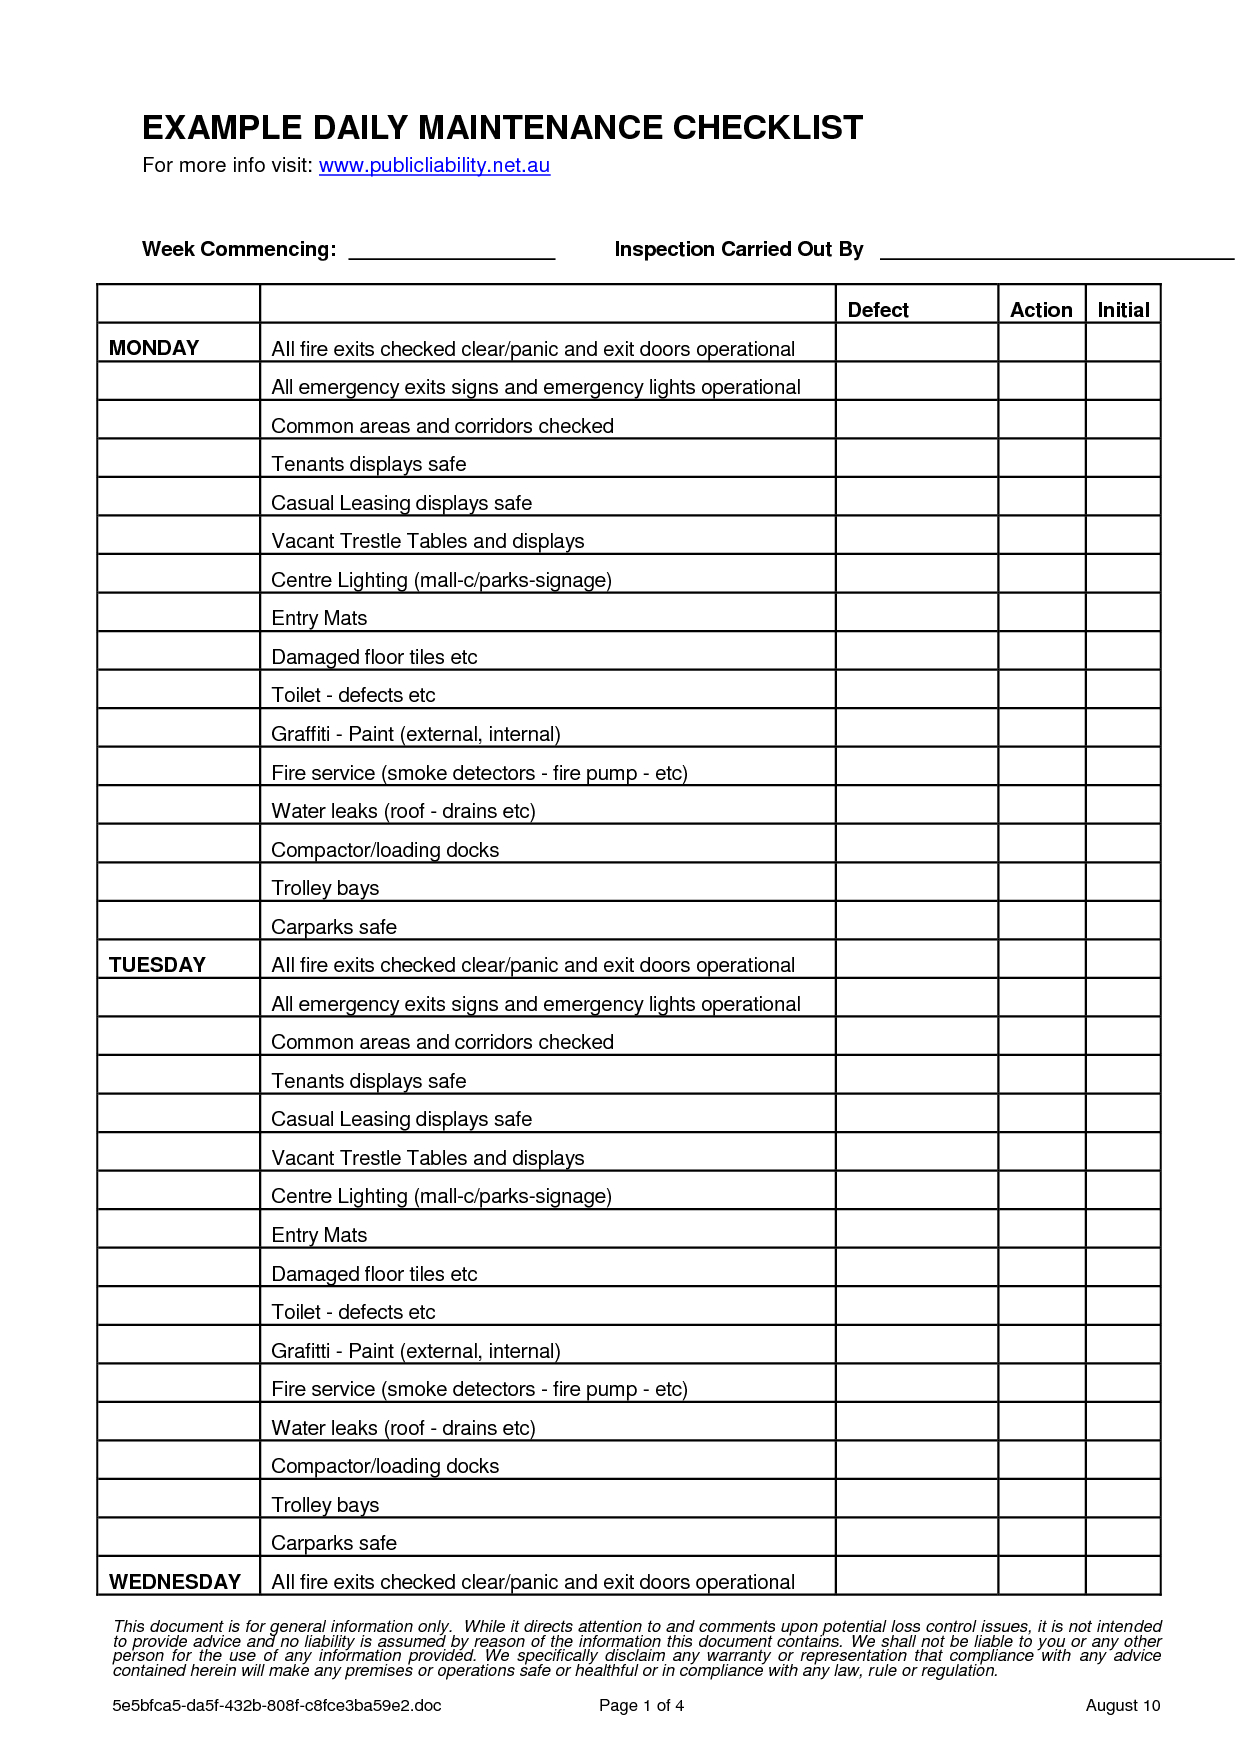 Vehicle Preventive Maintenance Schedule Template – printable  With Hotel Preventive Maintenance Checklist Template Throughout Hotel Preventive Maintenance Checklist Template